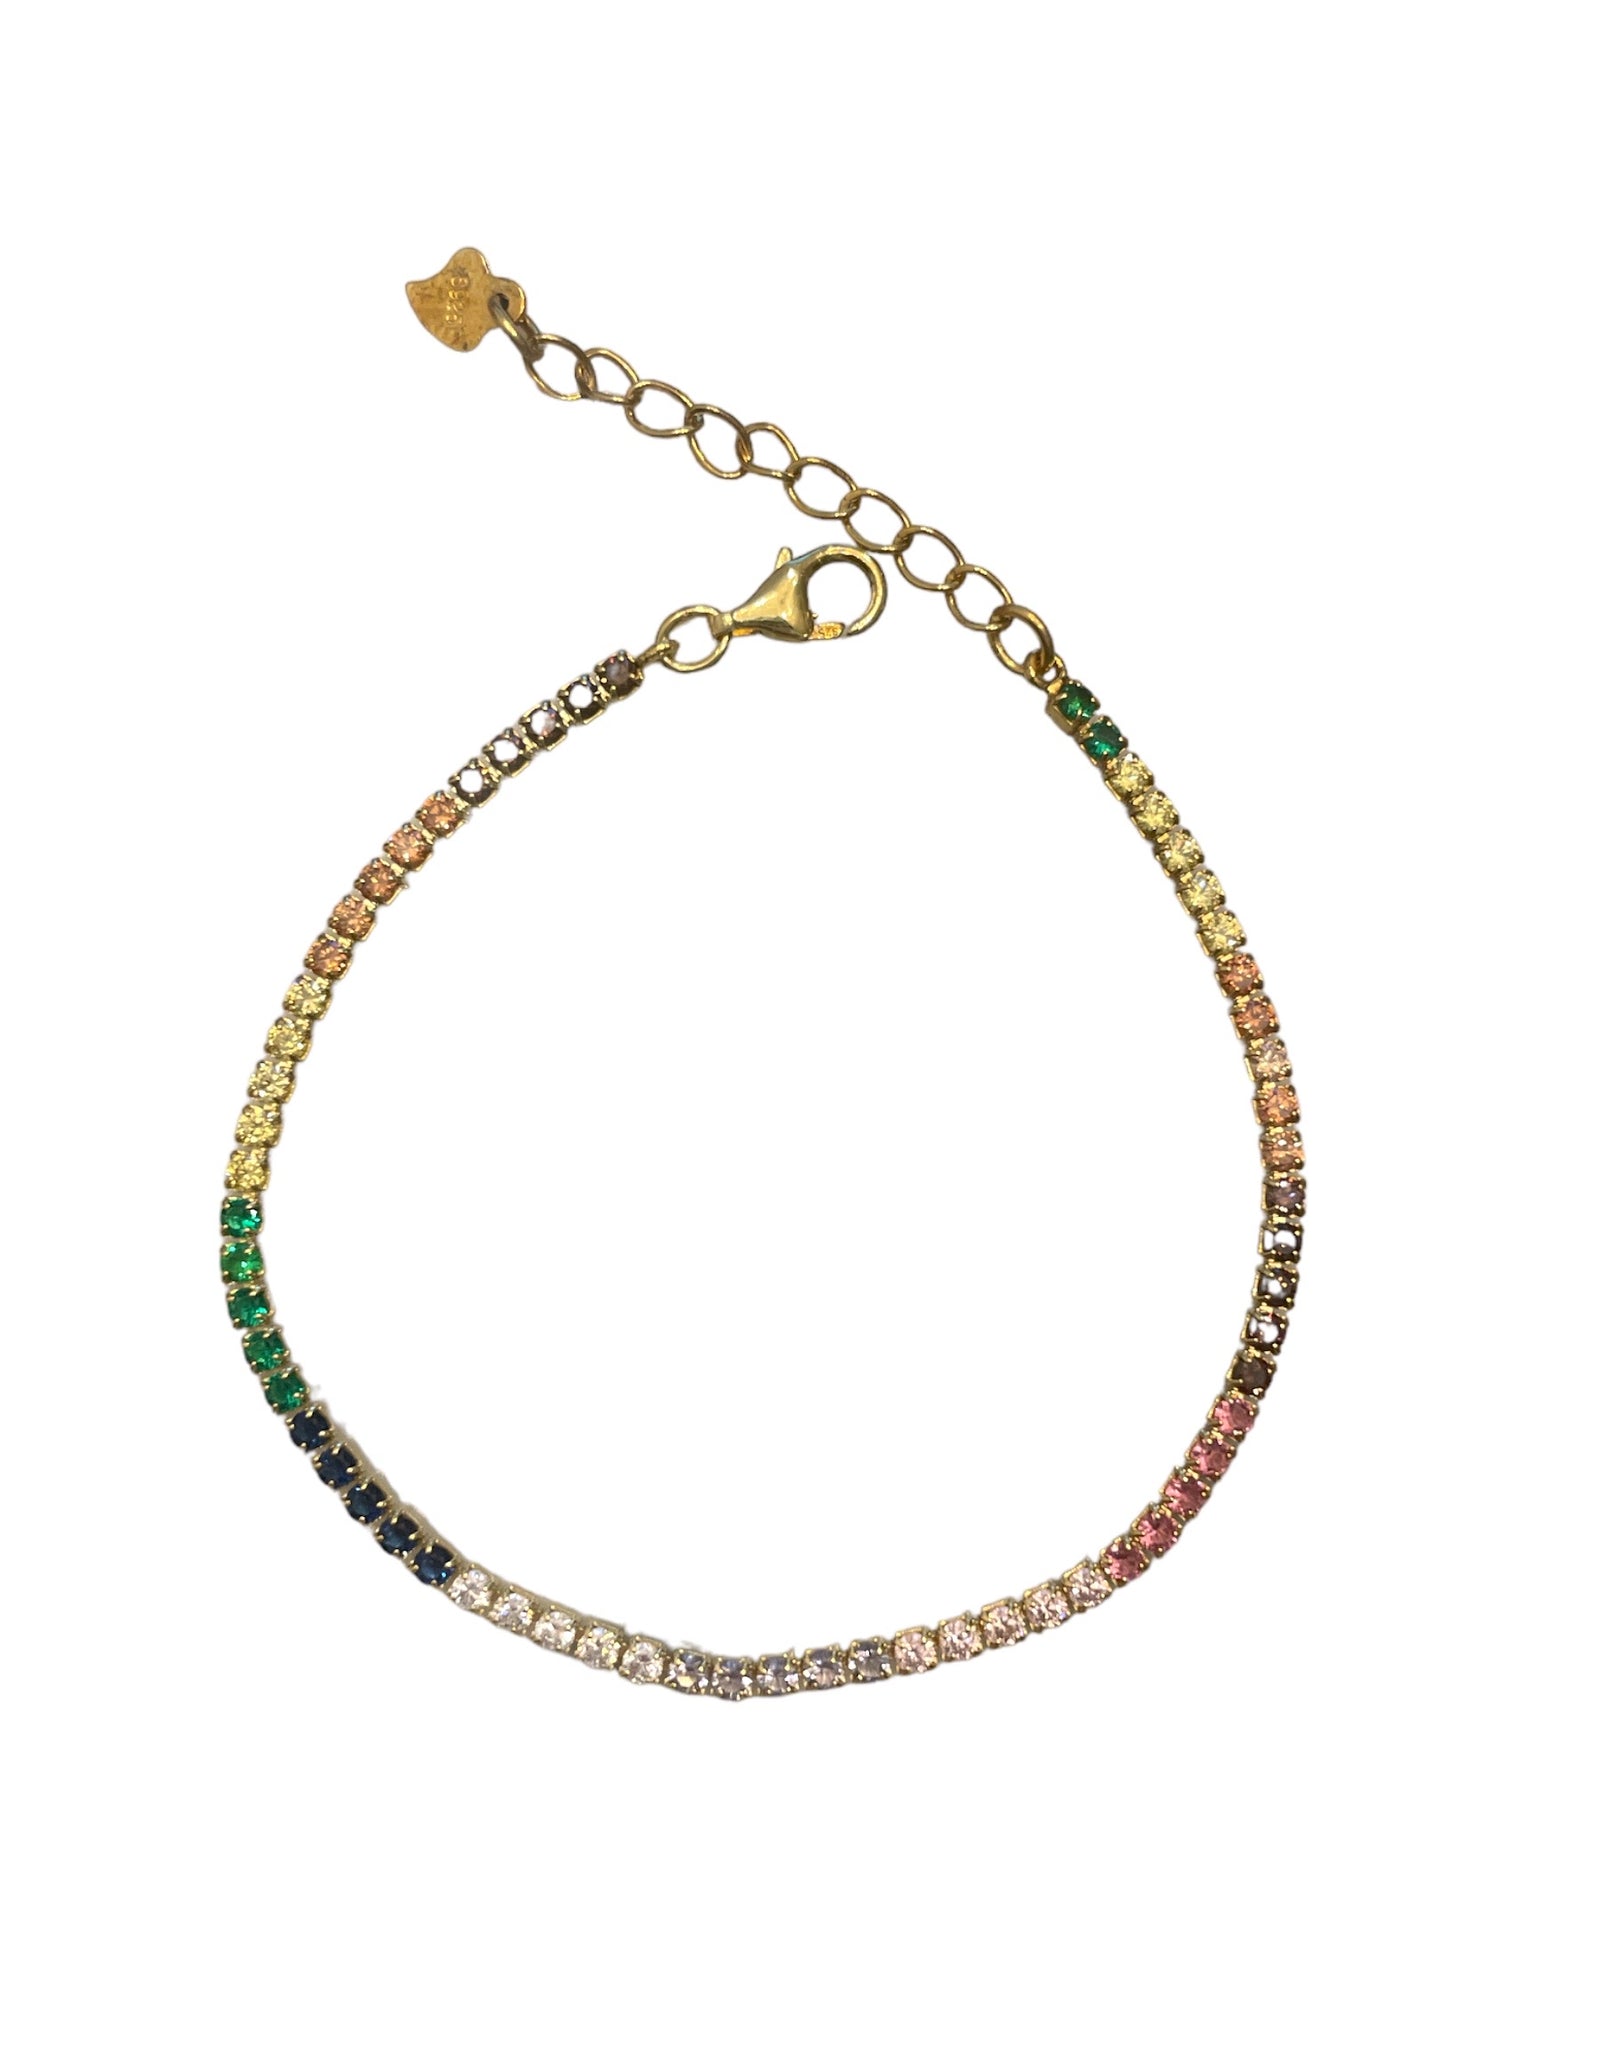 Thin rainbow tennis bracelet